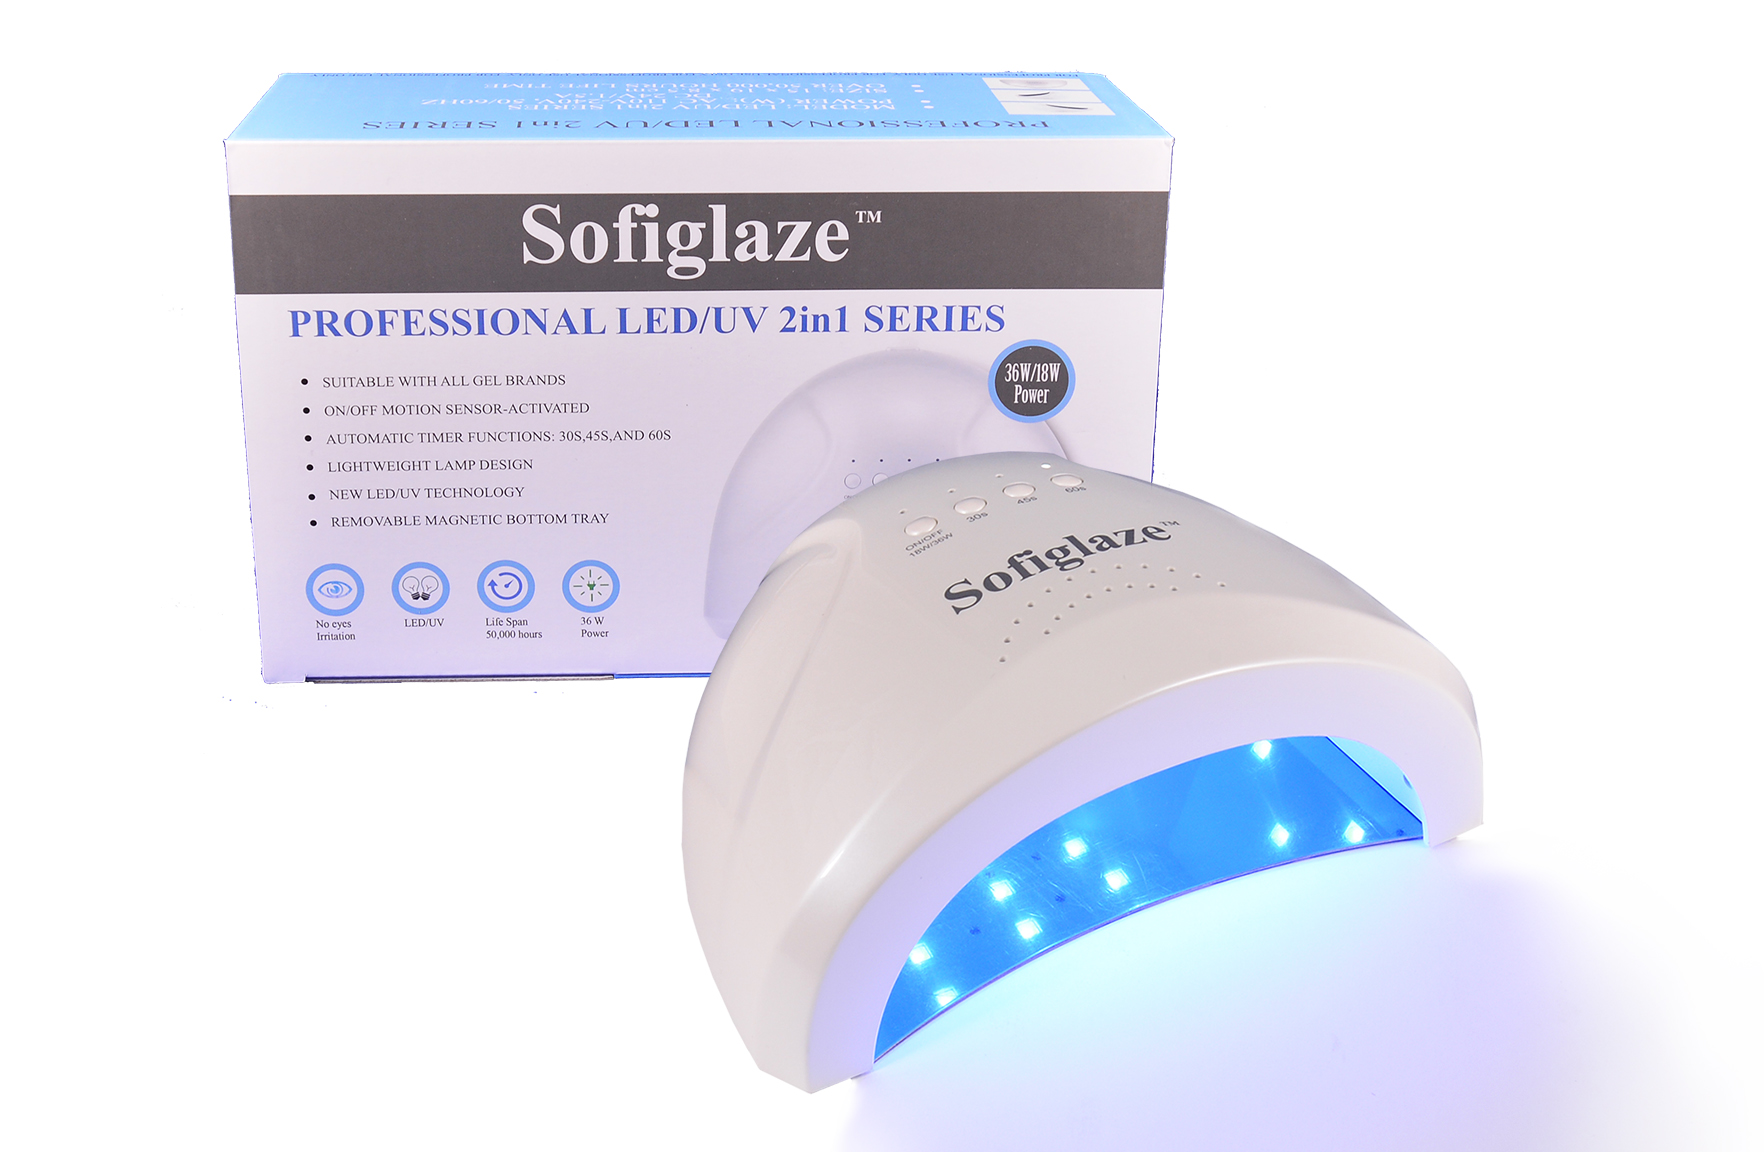 Sofiglaze Professional LED/UV 2in1 Series